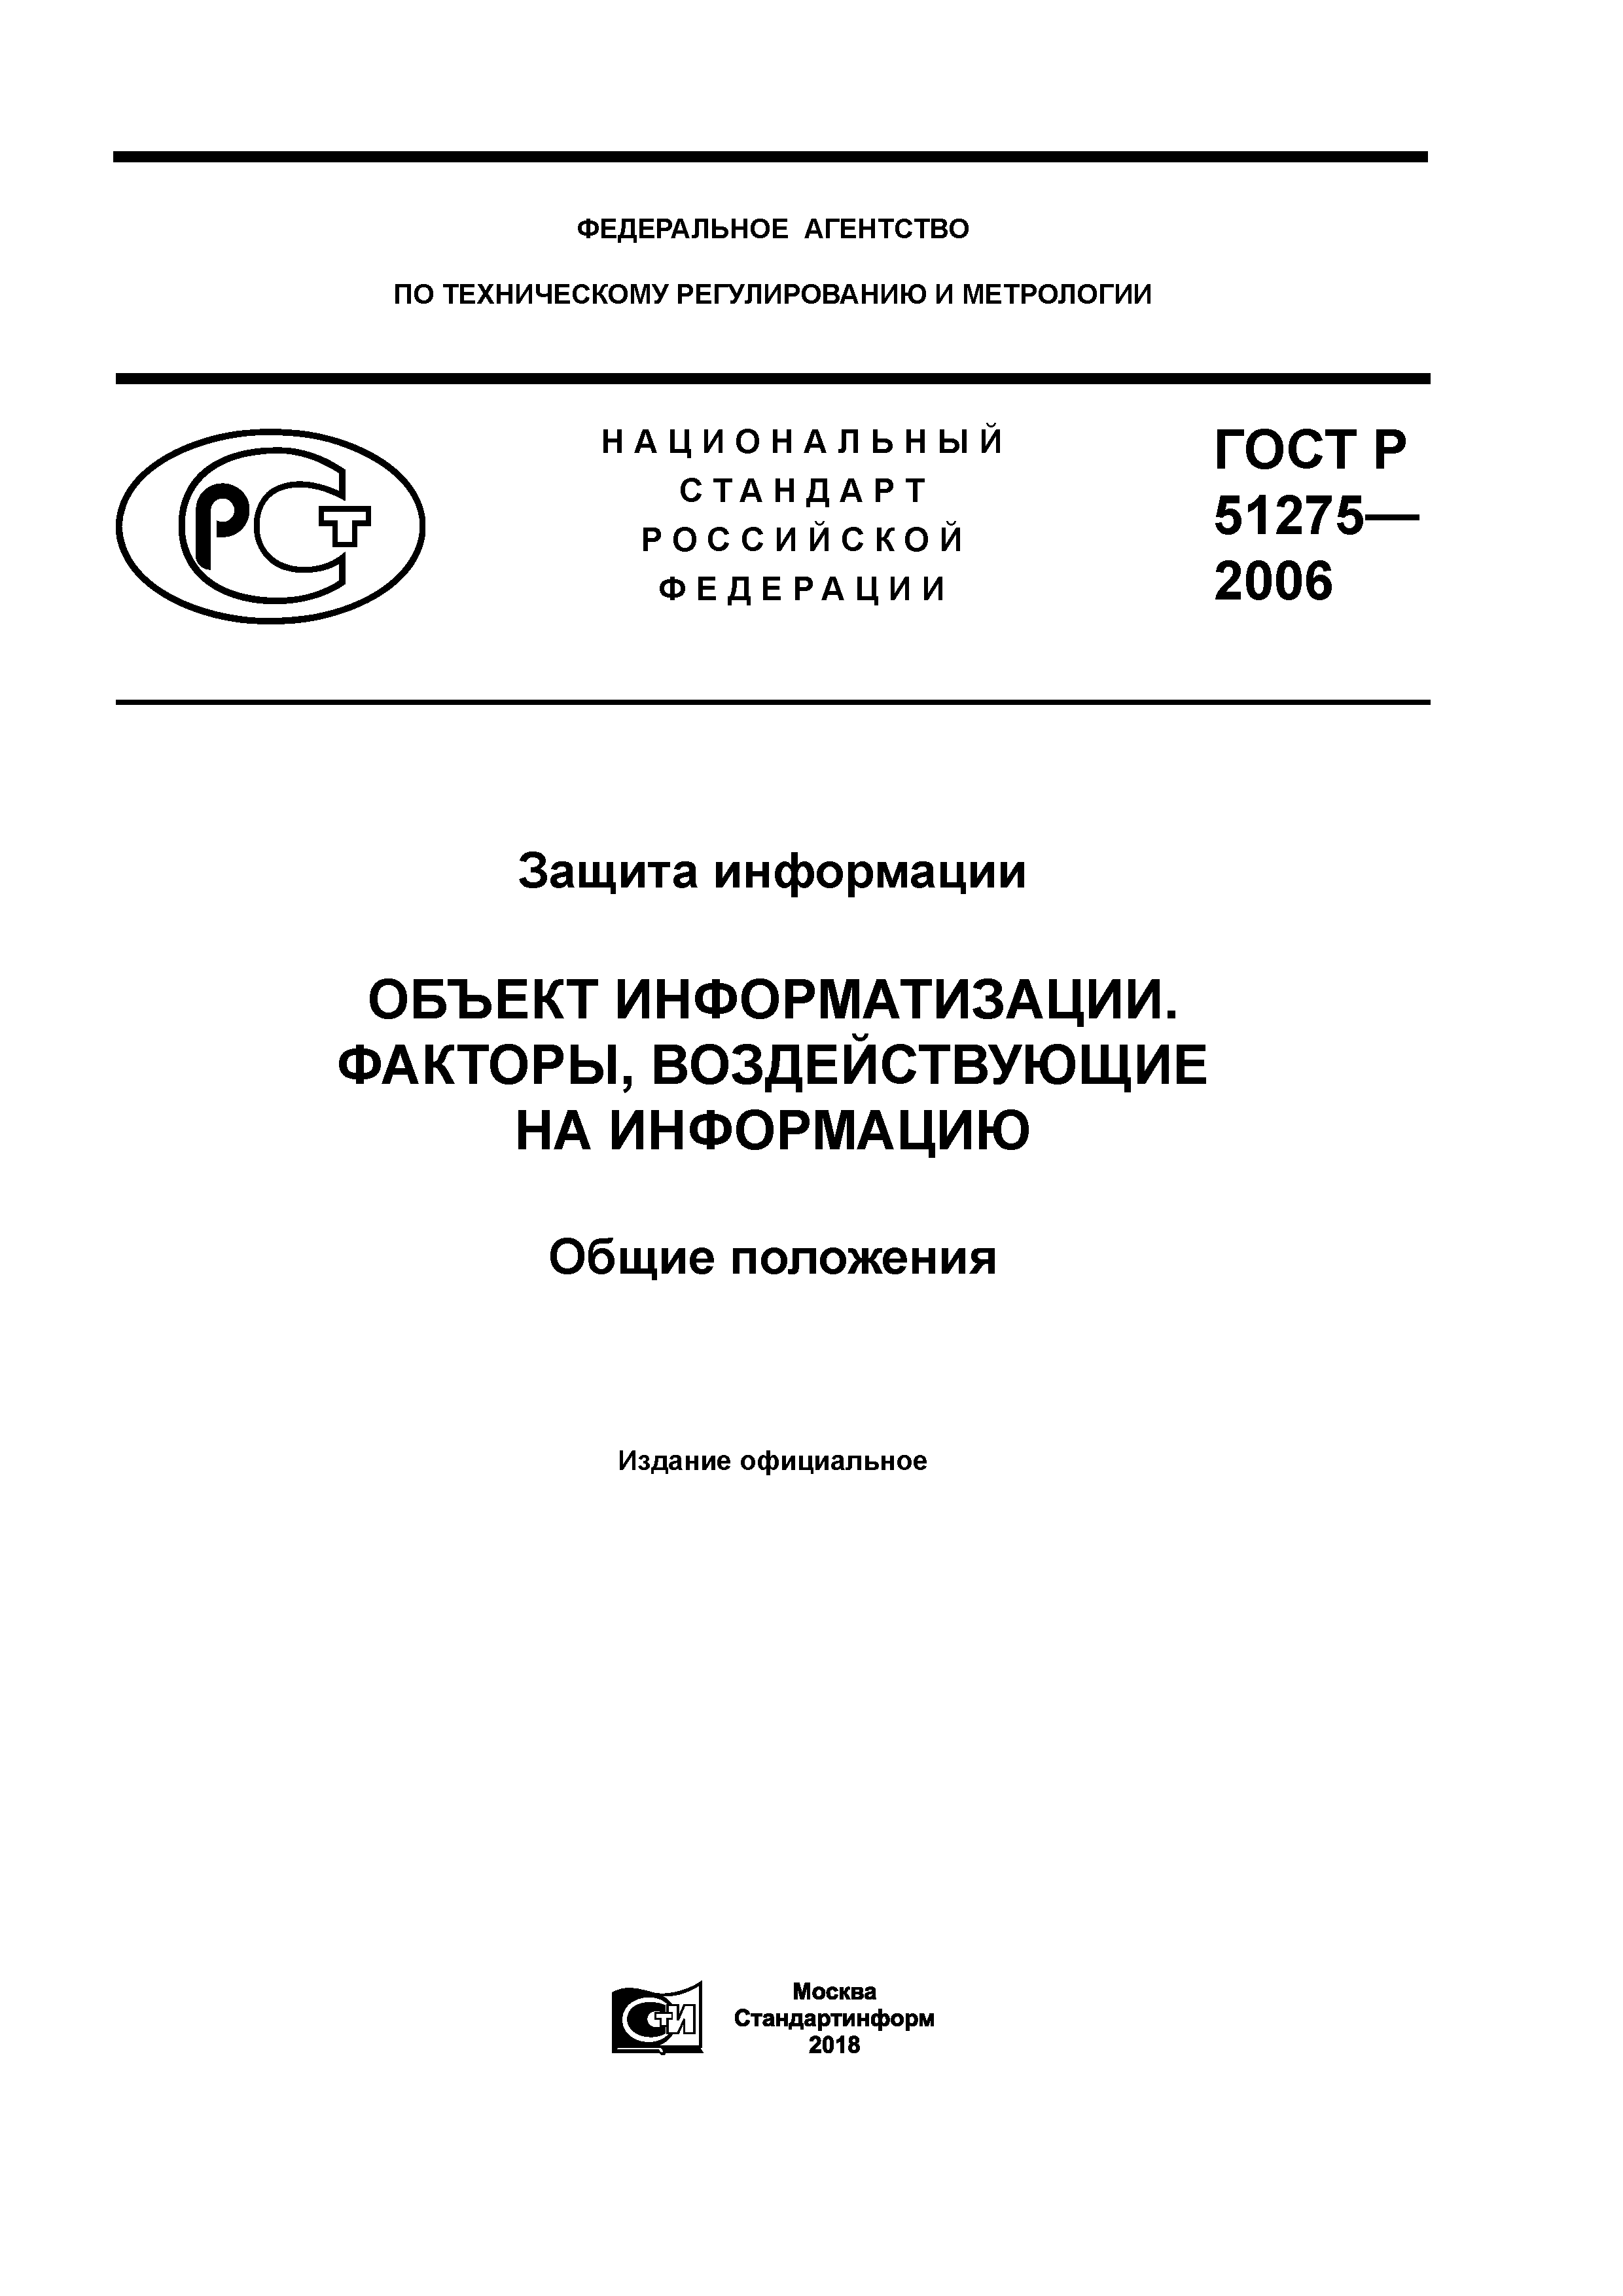 ГОСТ Р 51275-2006